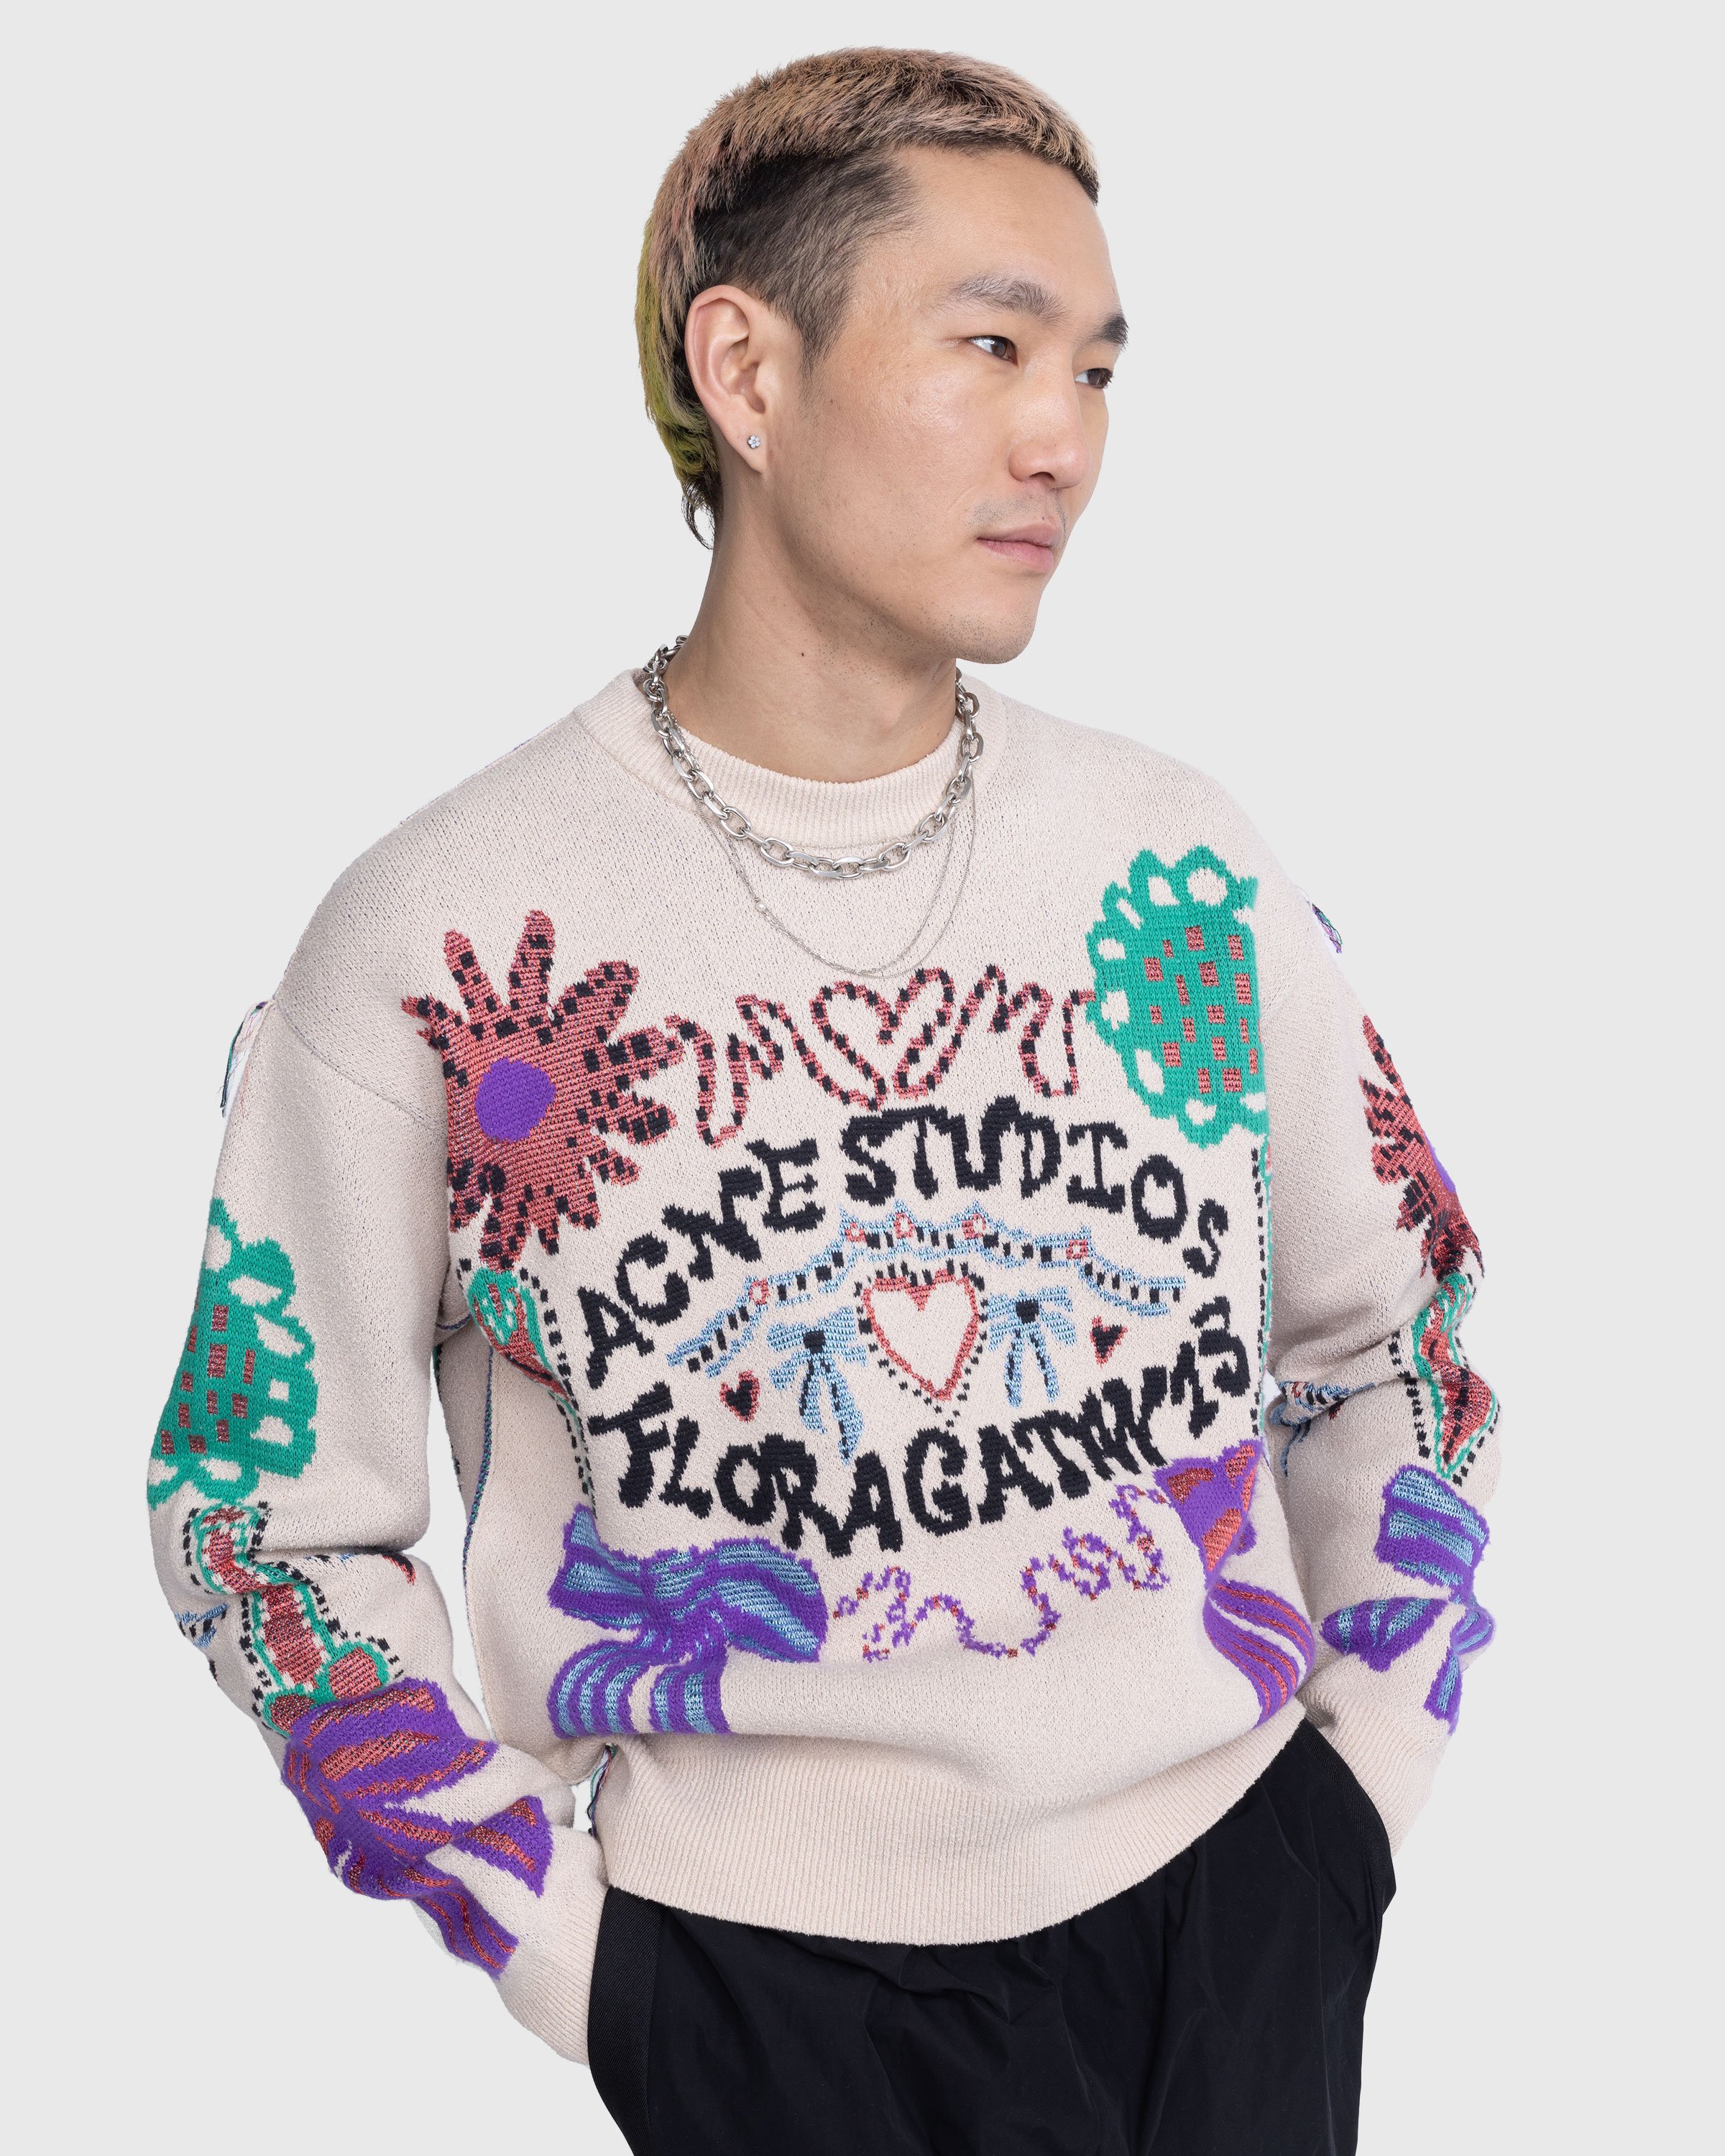 Acne Studios - Floragatan Jacquard Sweater Multi - Clothing - Multi - Image 5